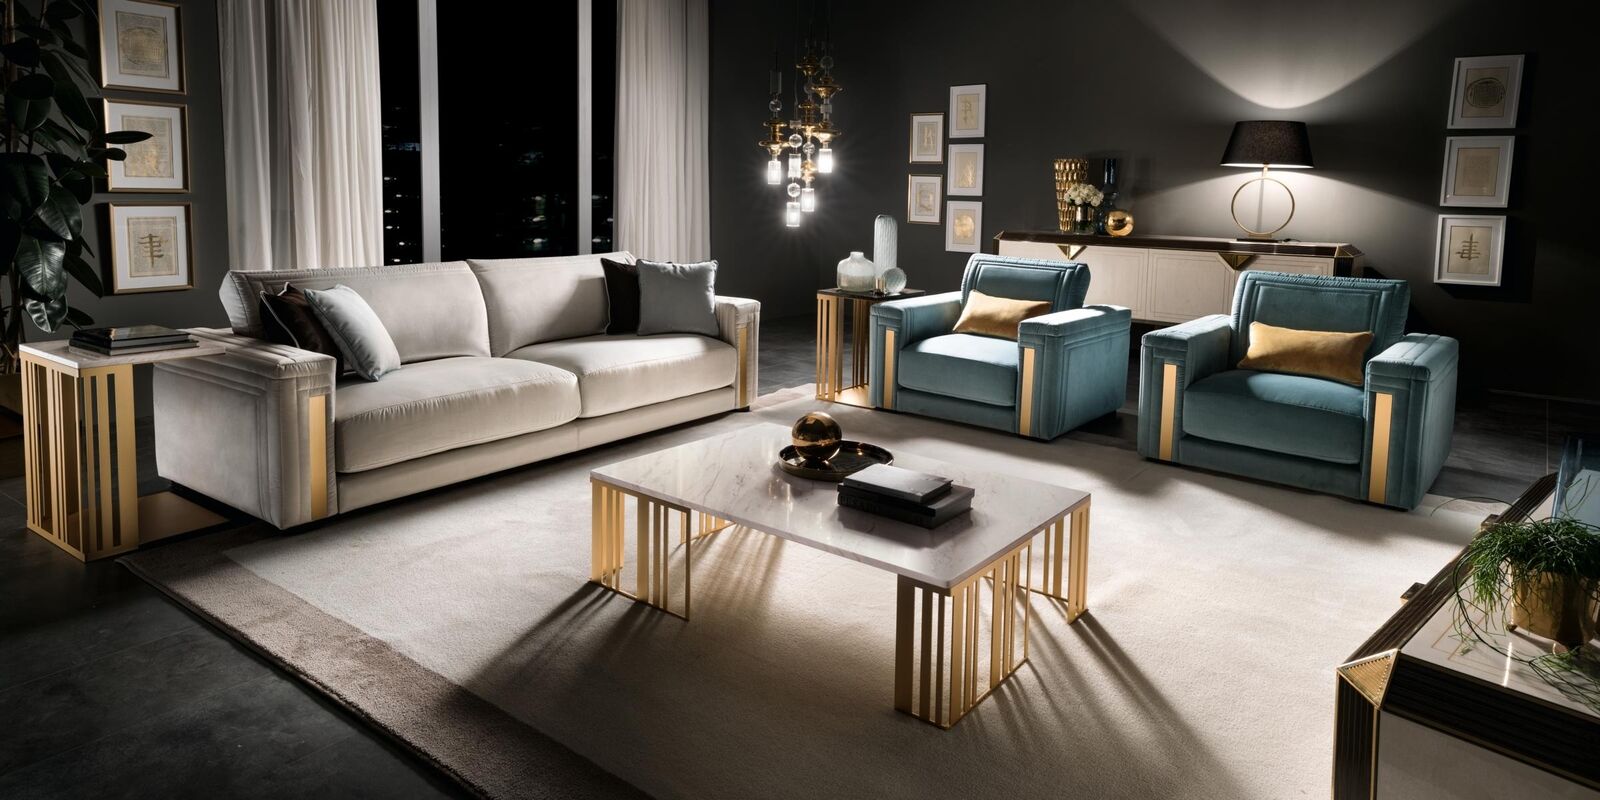 Sofagarnitur 31 Sitzer Set Design Sofa Polster Couchen Couch Luxus arredoclassic